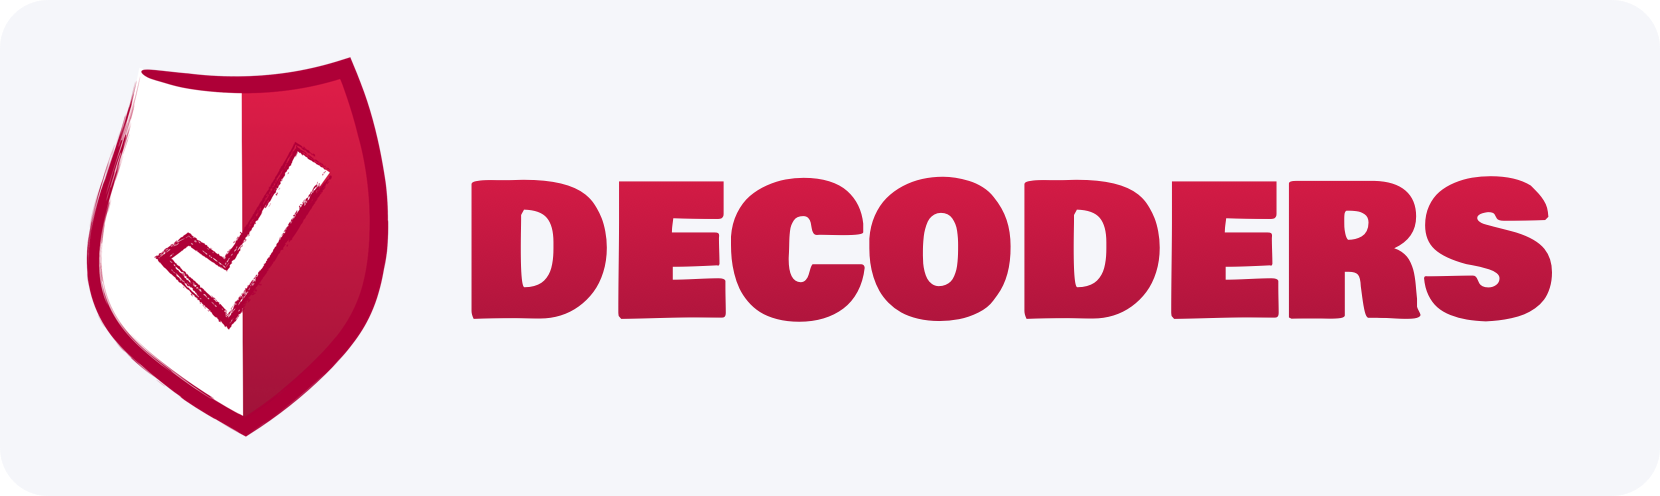 Decoders logo